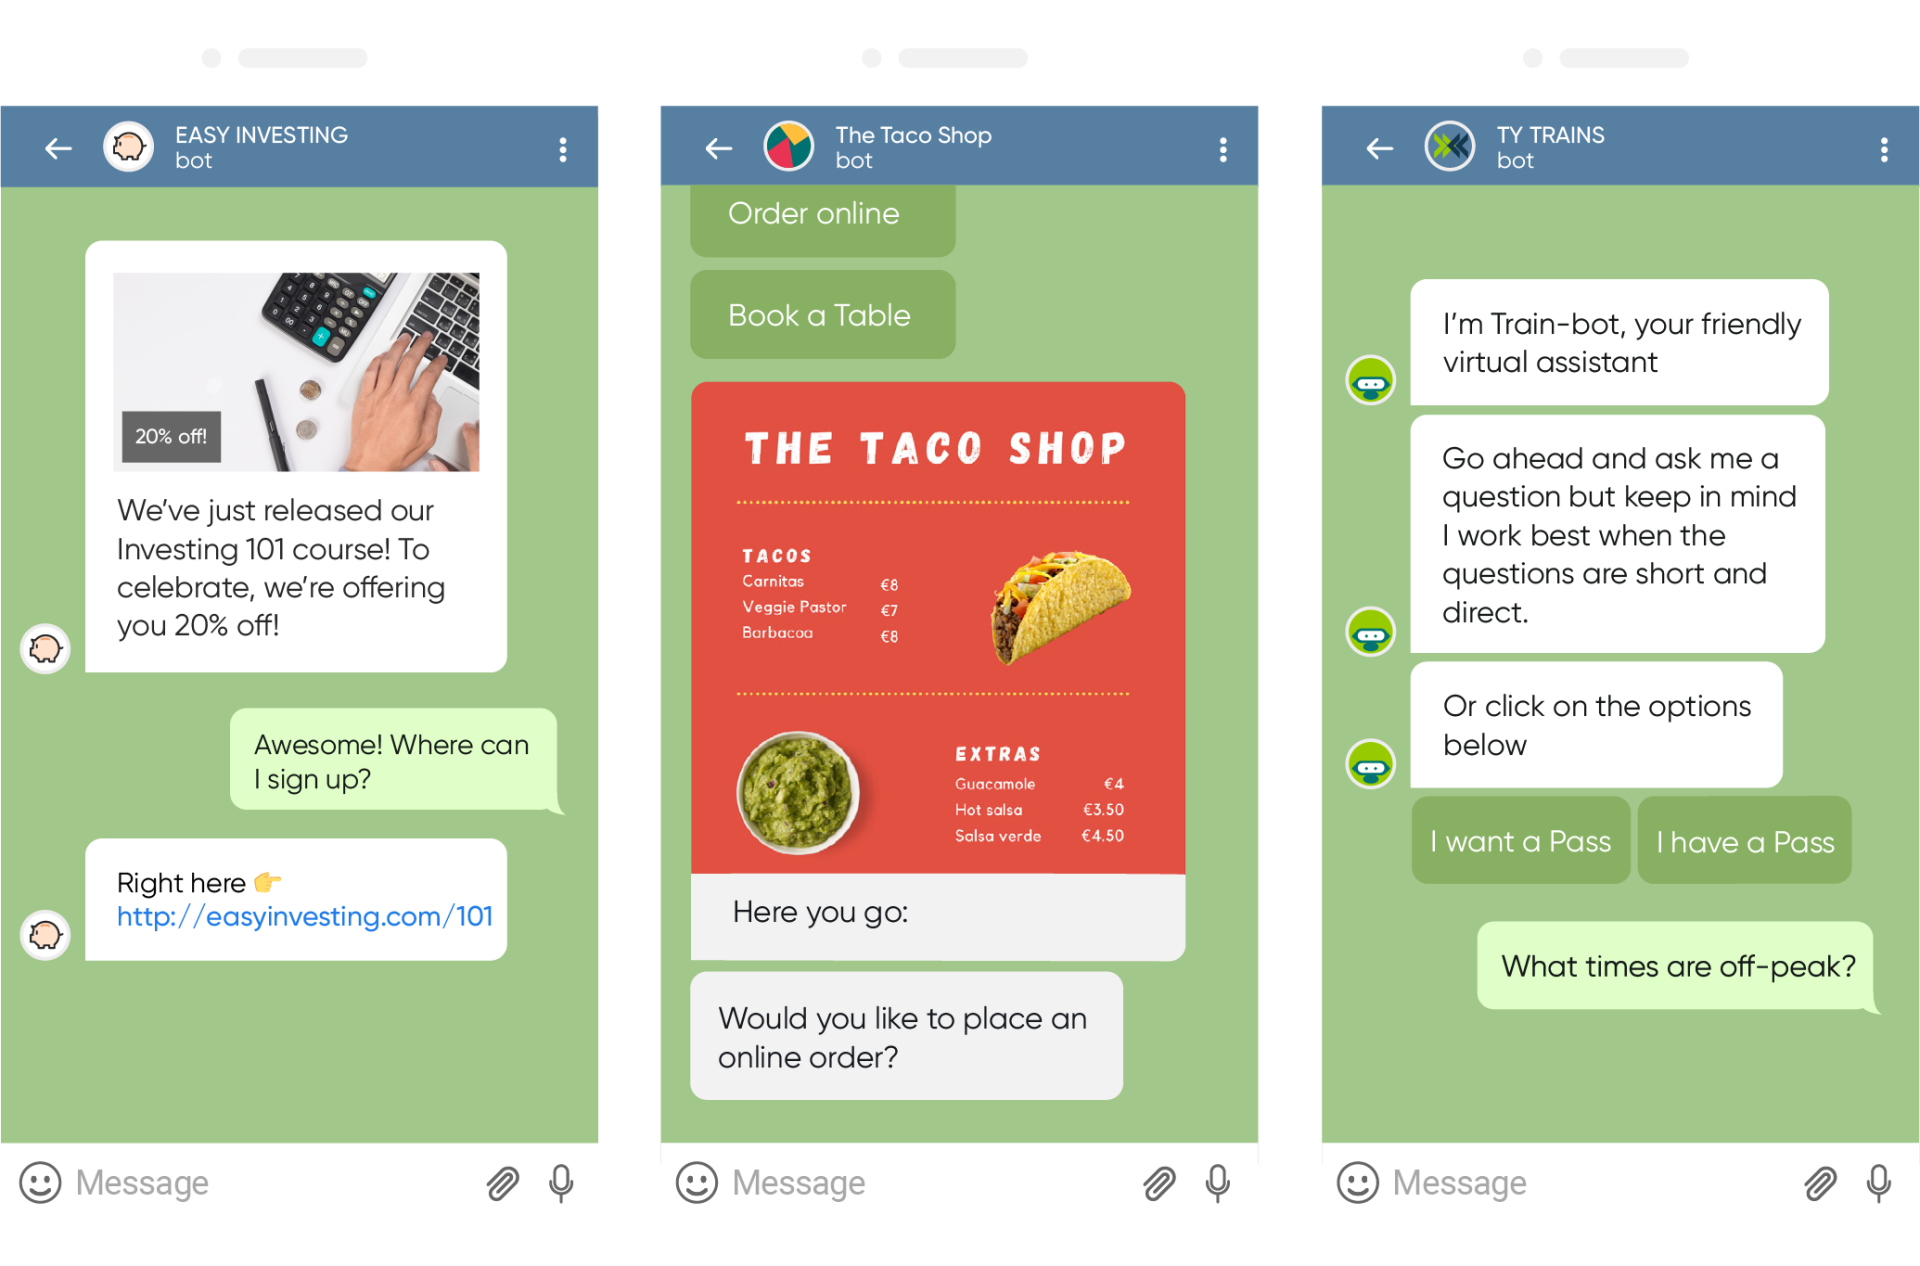 telegram screenshots of conversations with customers